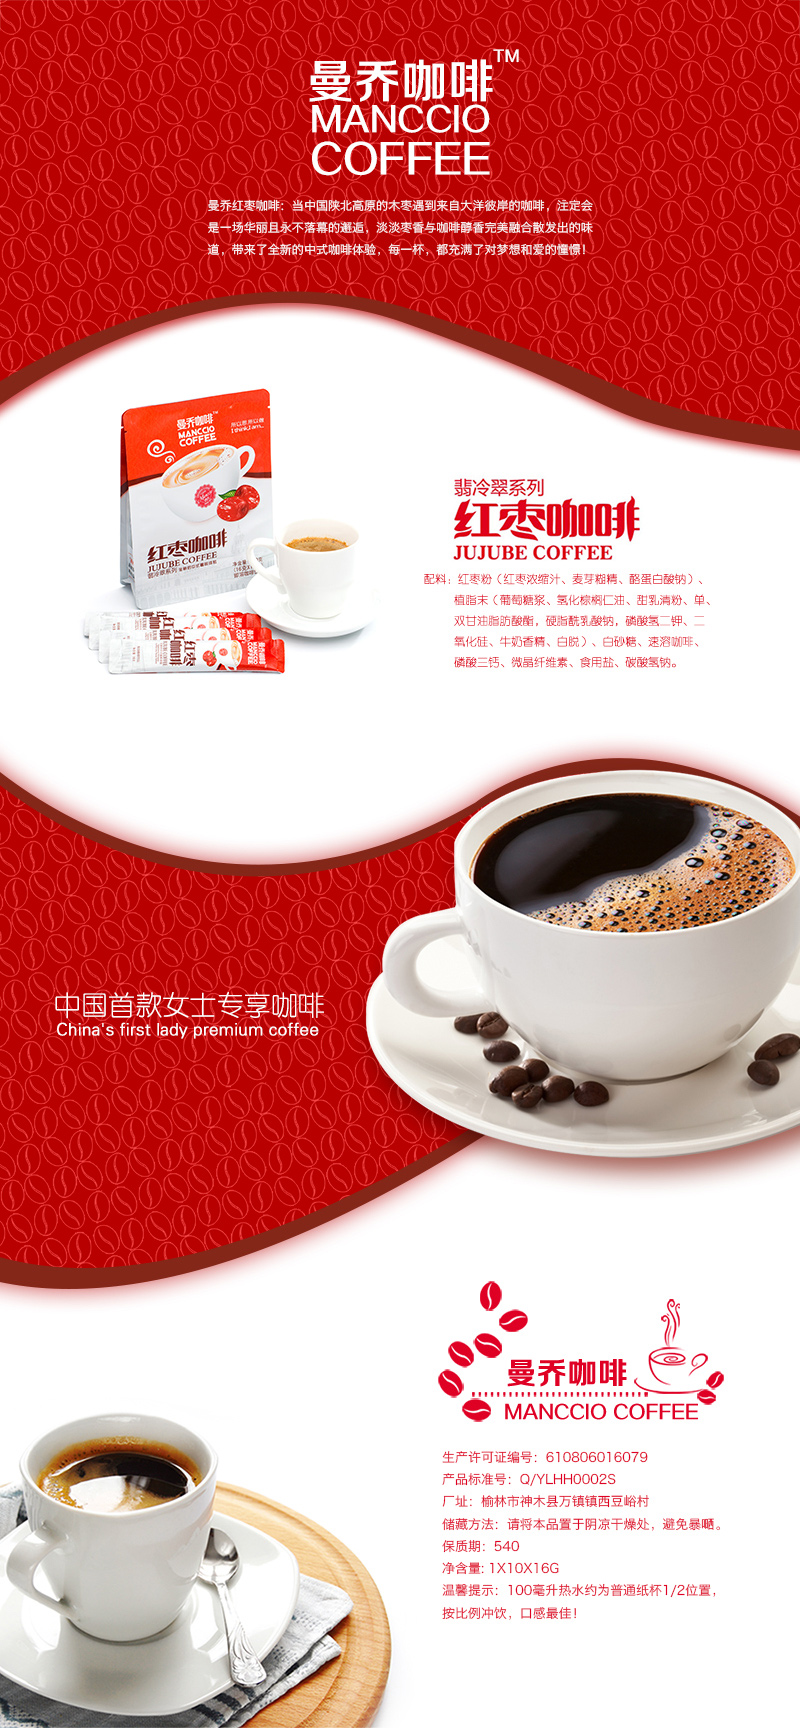 CCTV4远方的家袋装陕北曼乔咖啡红枣三合一速溶咖啡口感好